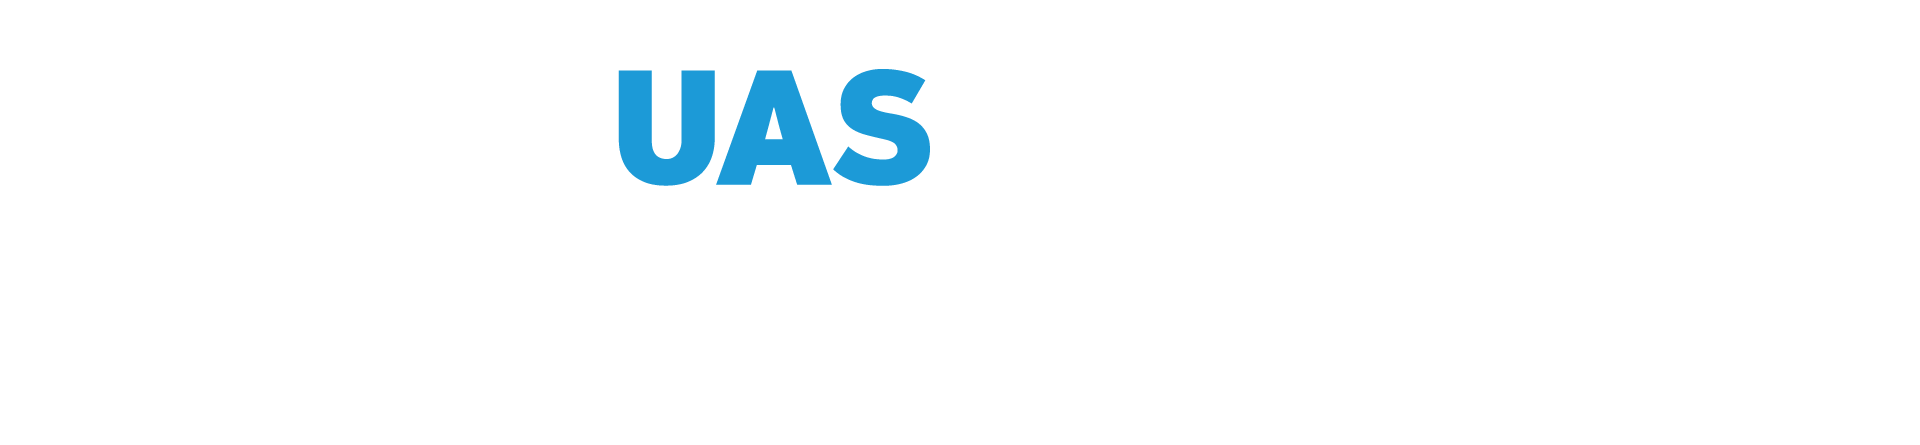 UAS Denmark logo 2021_m.INT_payoff - negativ